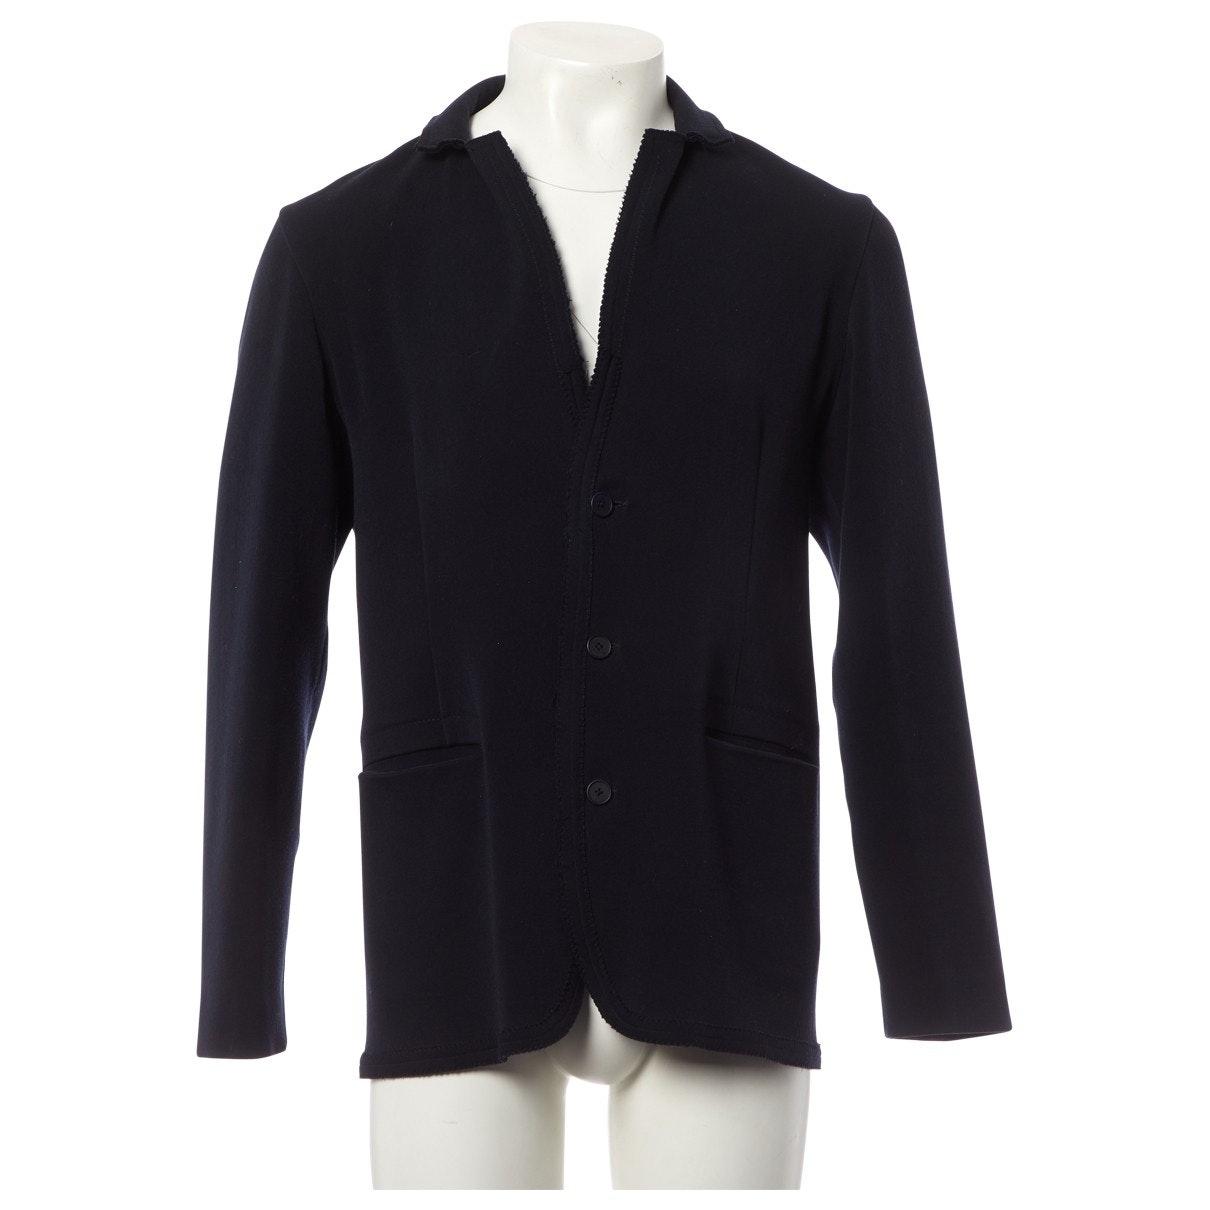 Bottega Veneta Wool Jacket in Navy (Blue) for Men - Lyst